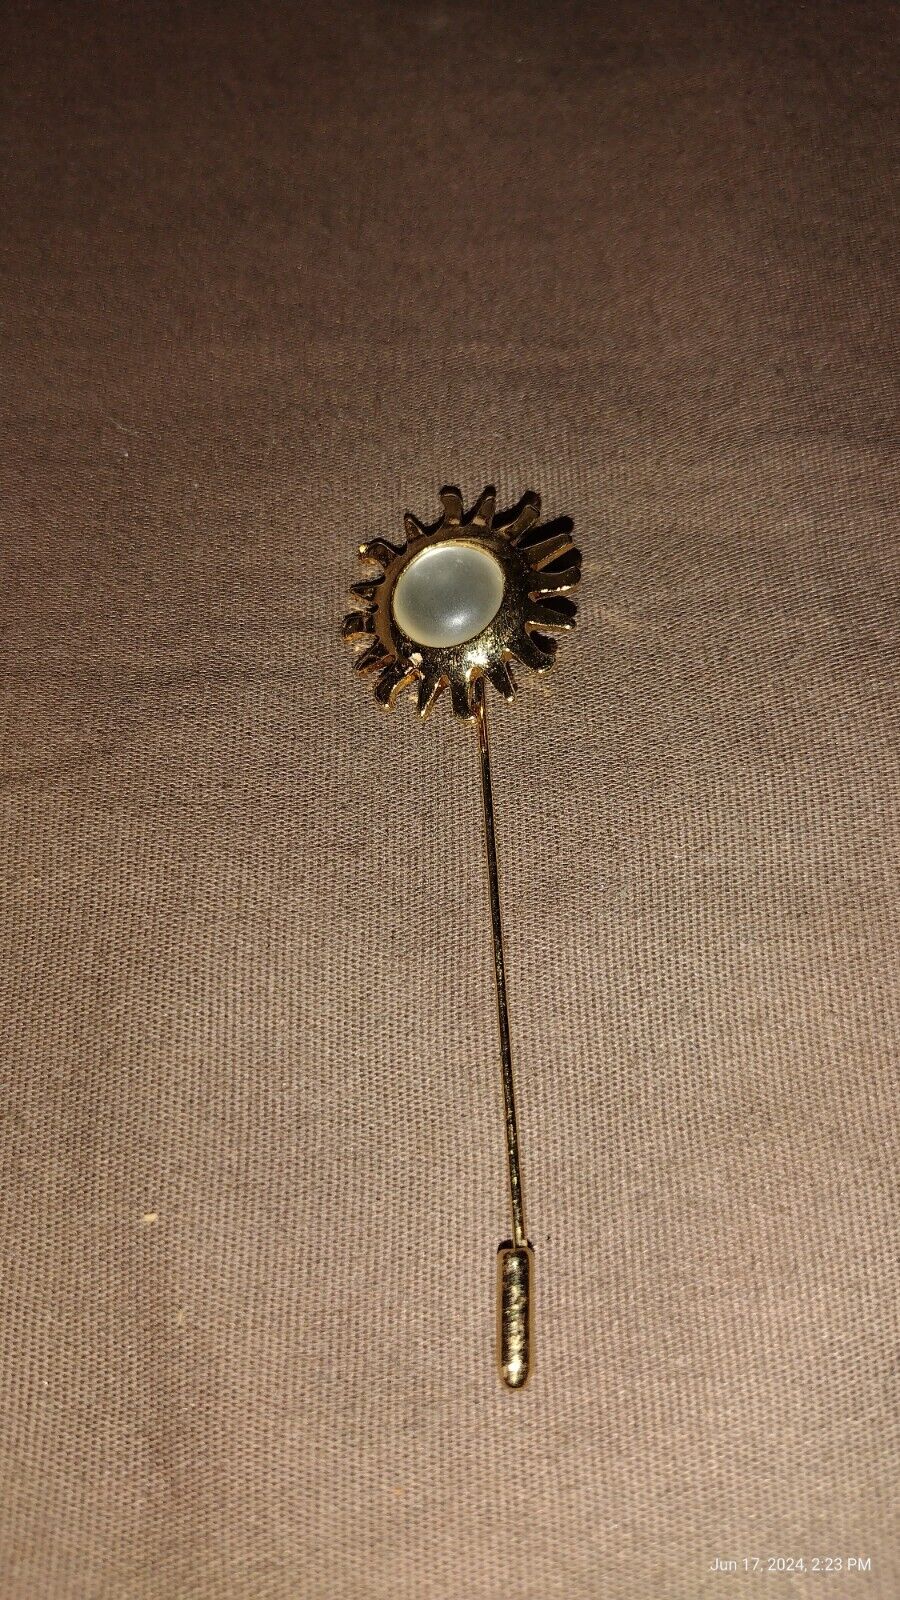 2 Vintage Stick Pins